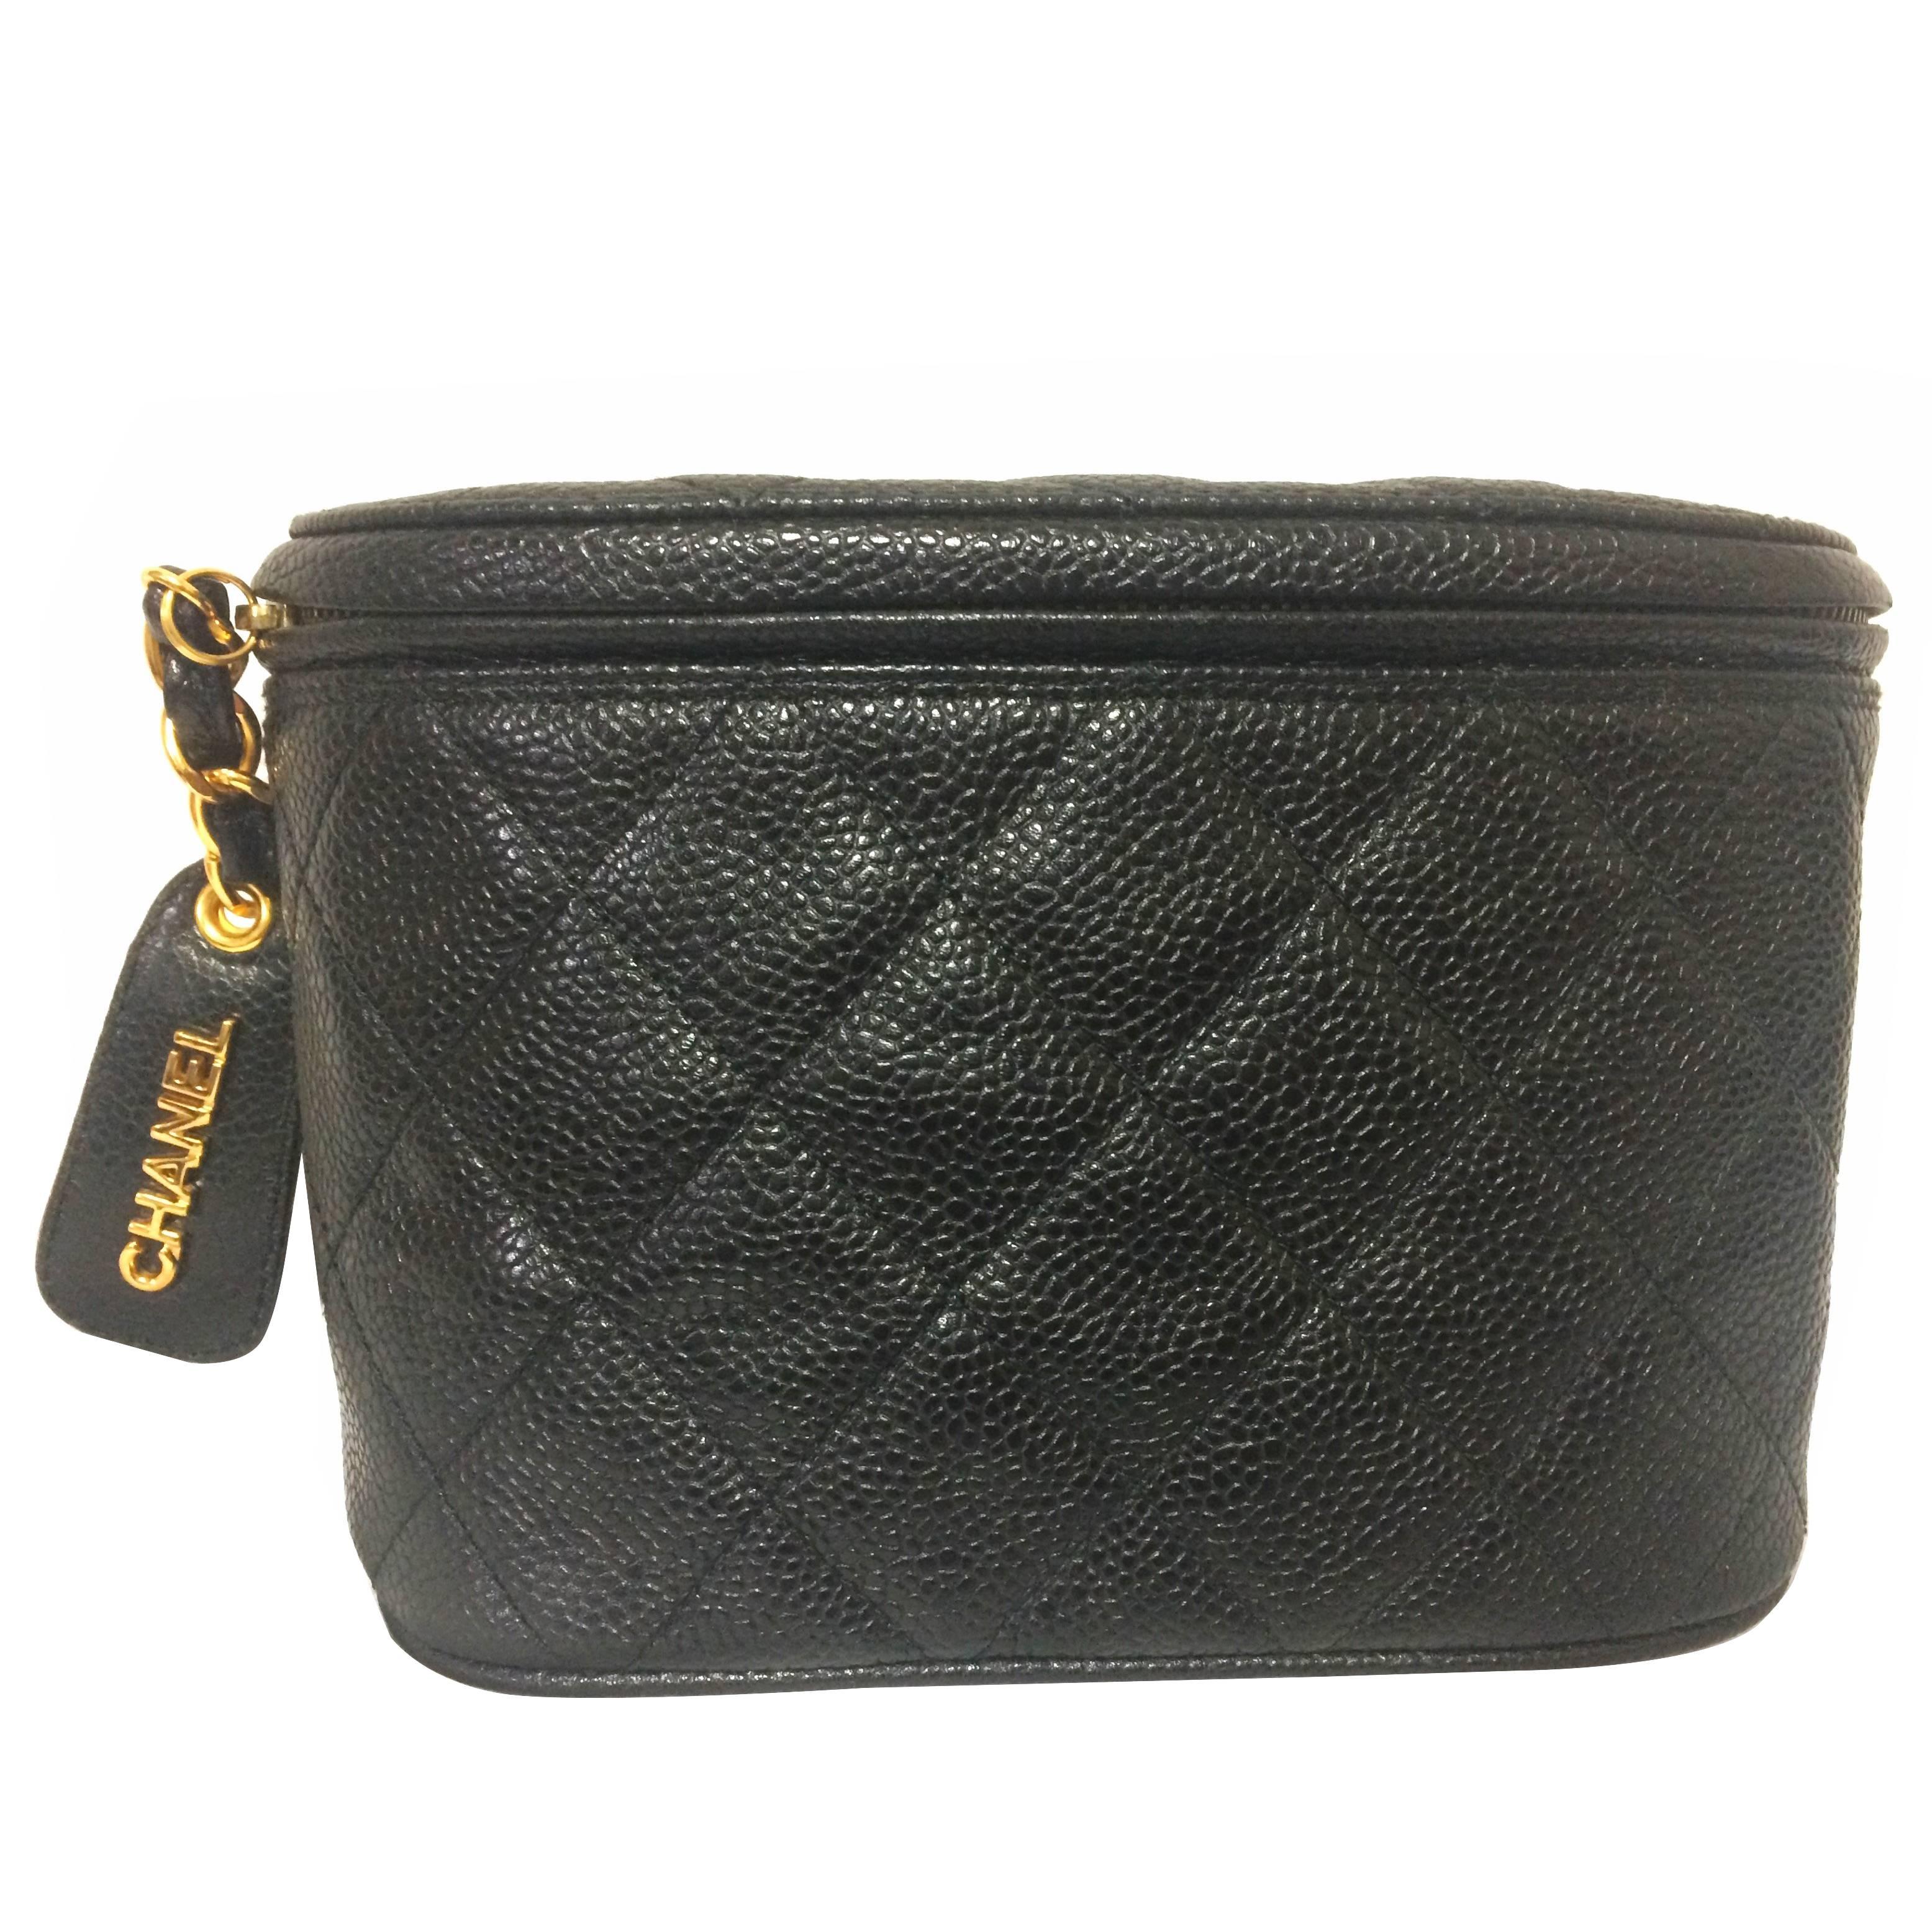 MINT. Vintage CHANEL black caviar leather purse pouch. Can be waist bag.